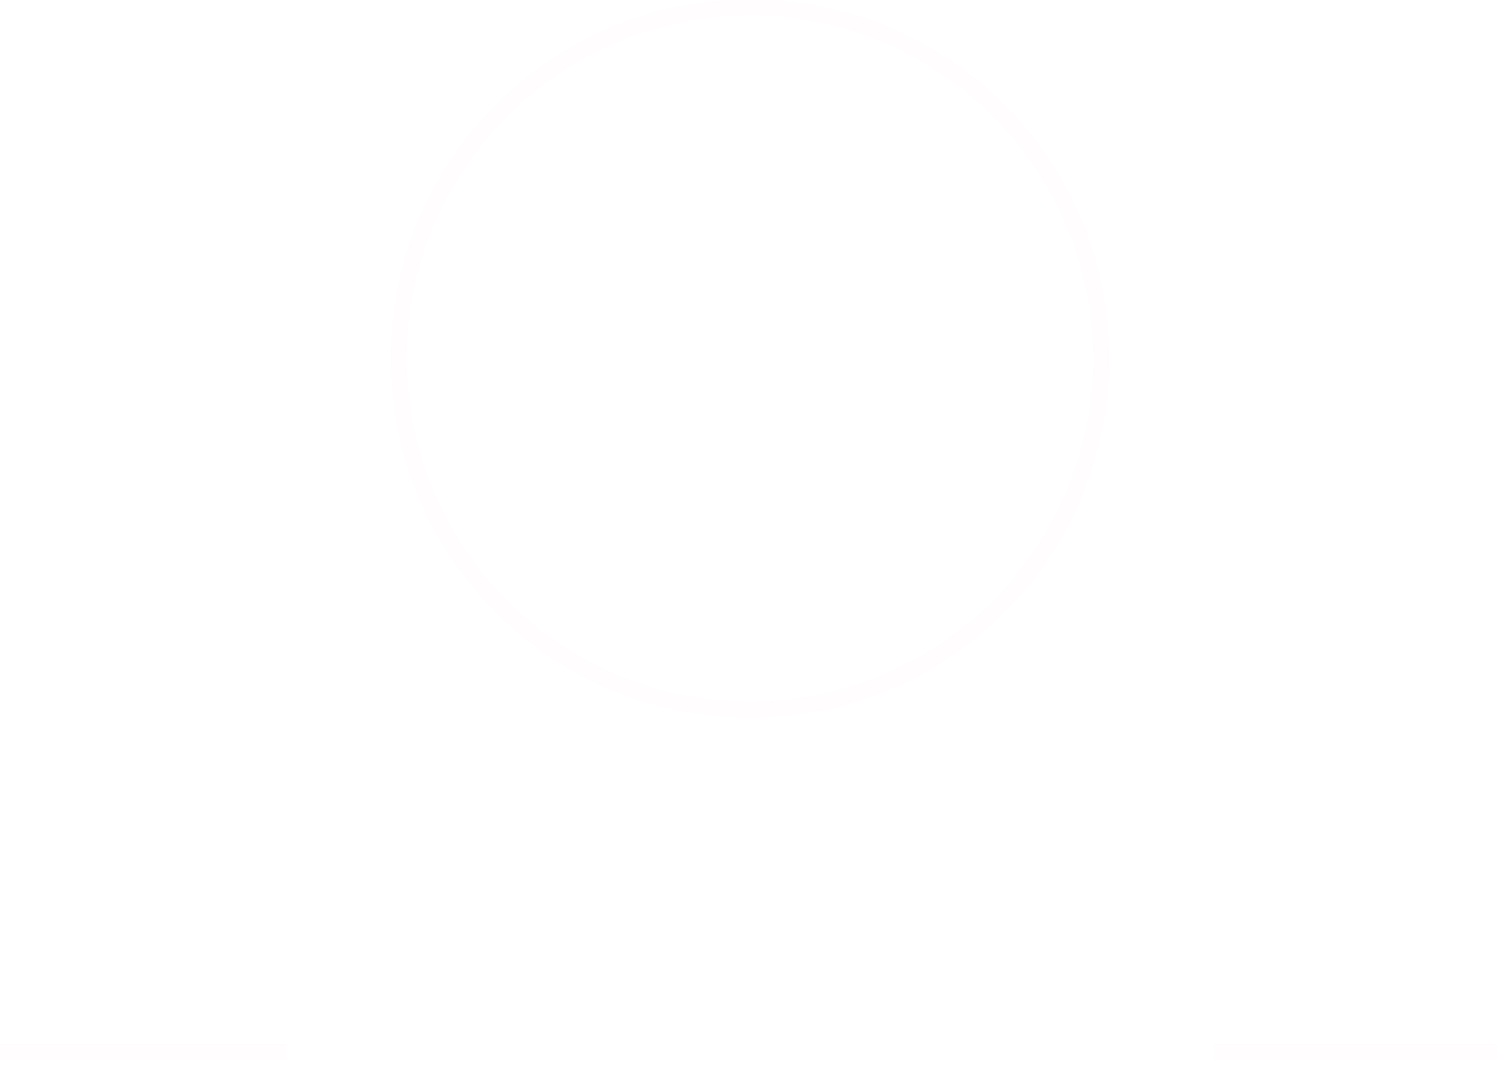 Blitz Baseball